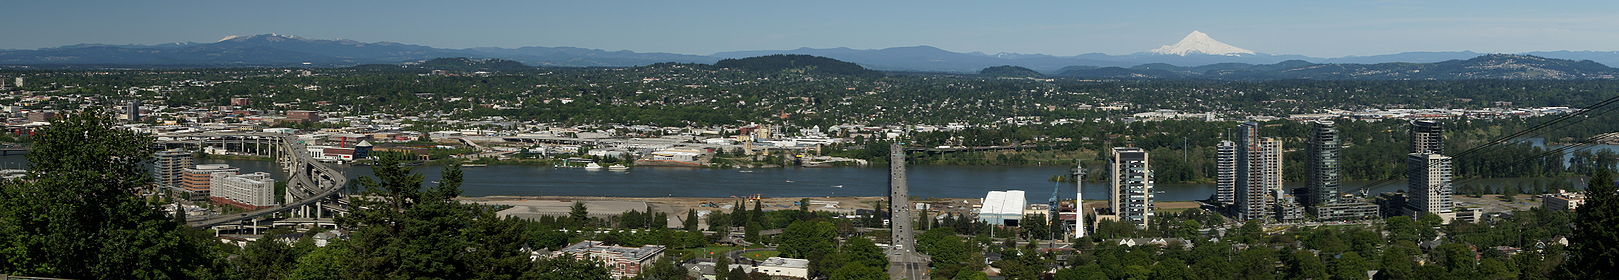 Portland panorama by Sam Churchill.jpg